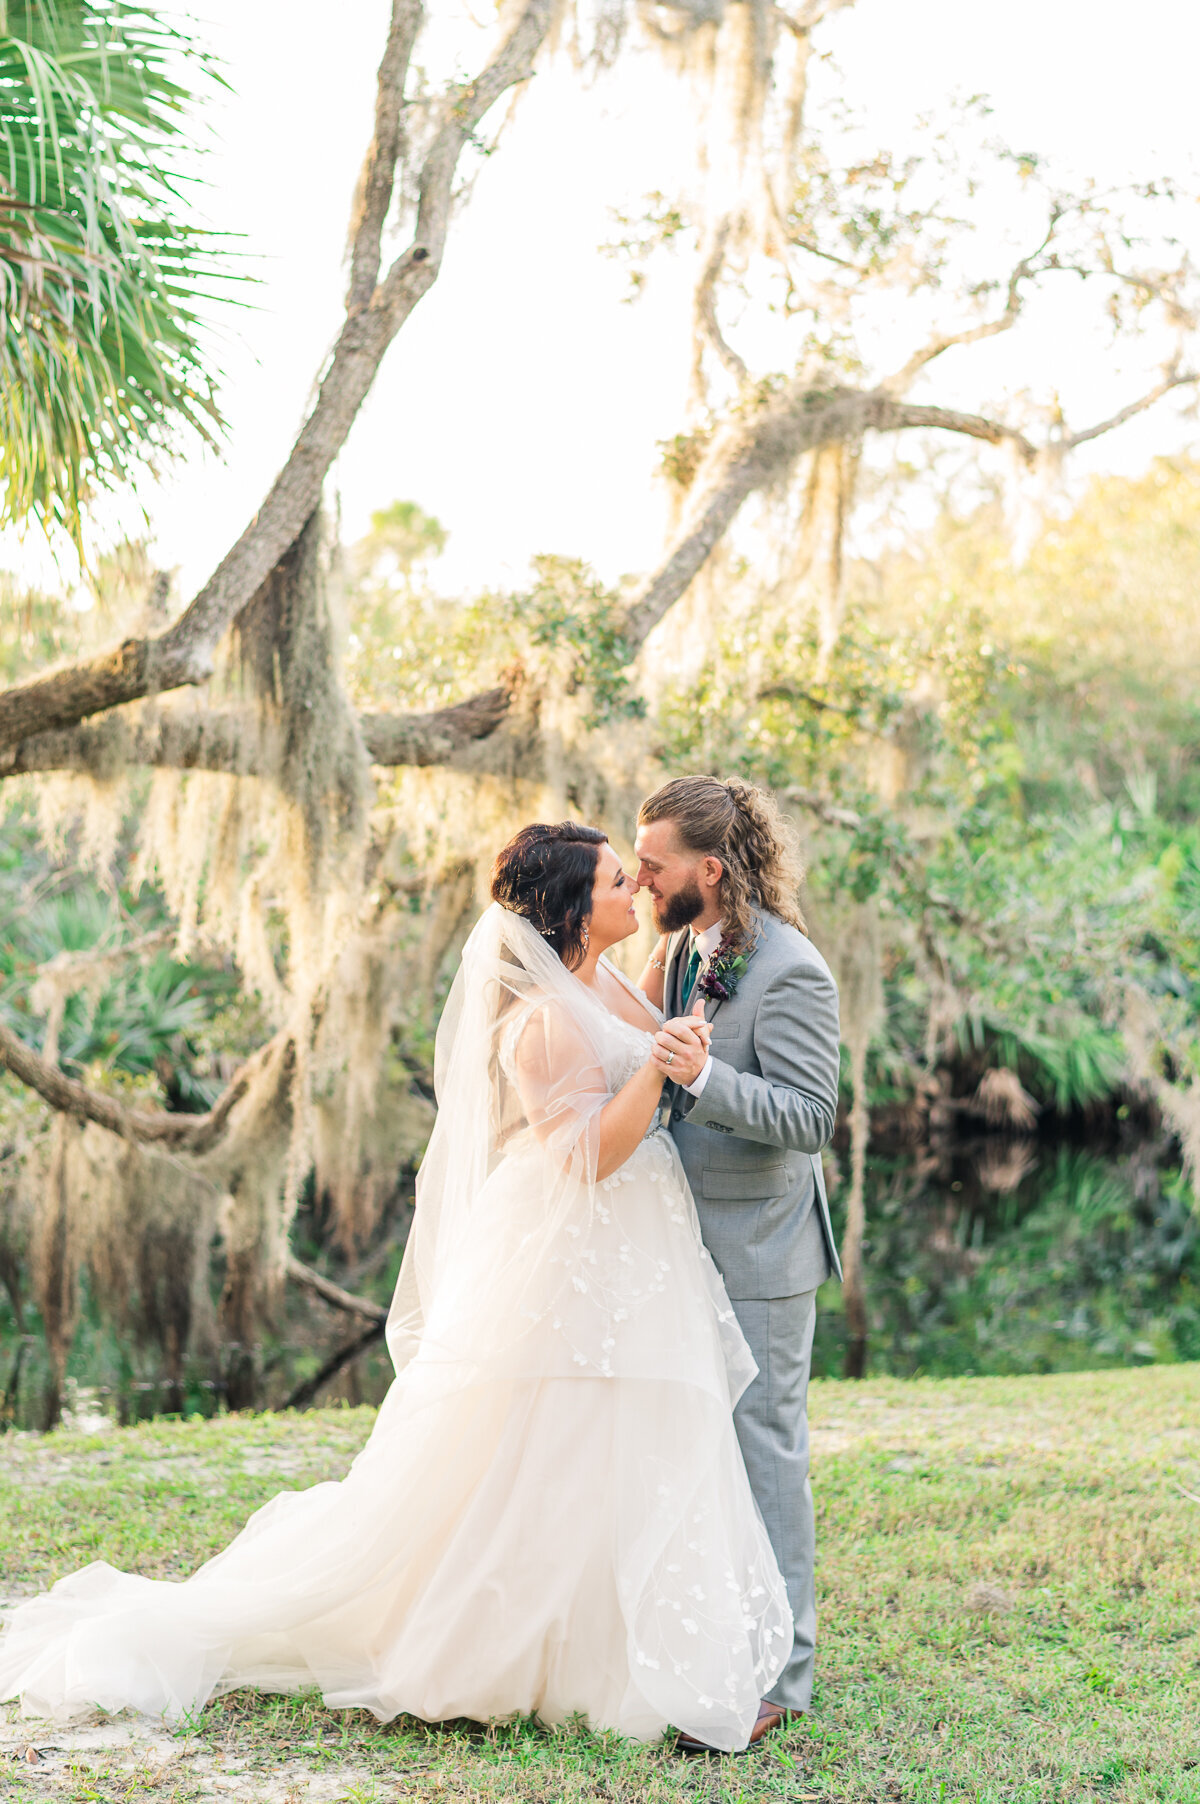 Emily & Ryan Up the Creek Wedding Couple Portrait | Lisa Marshall Photography